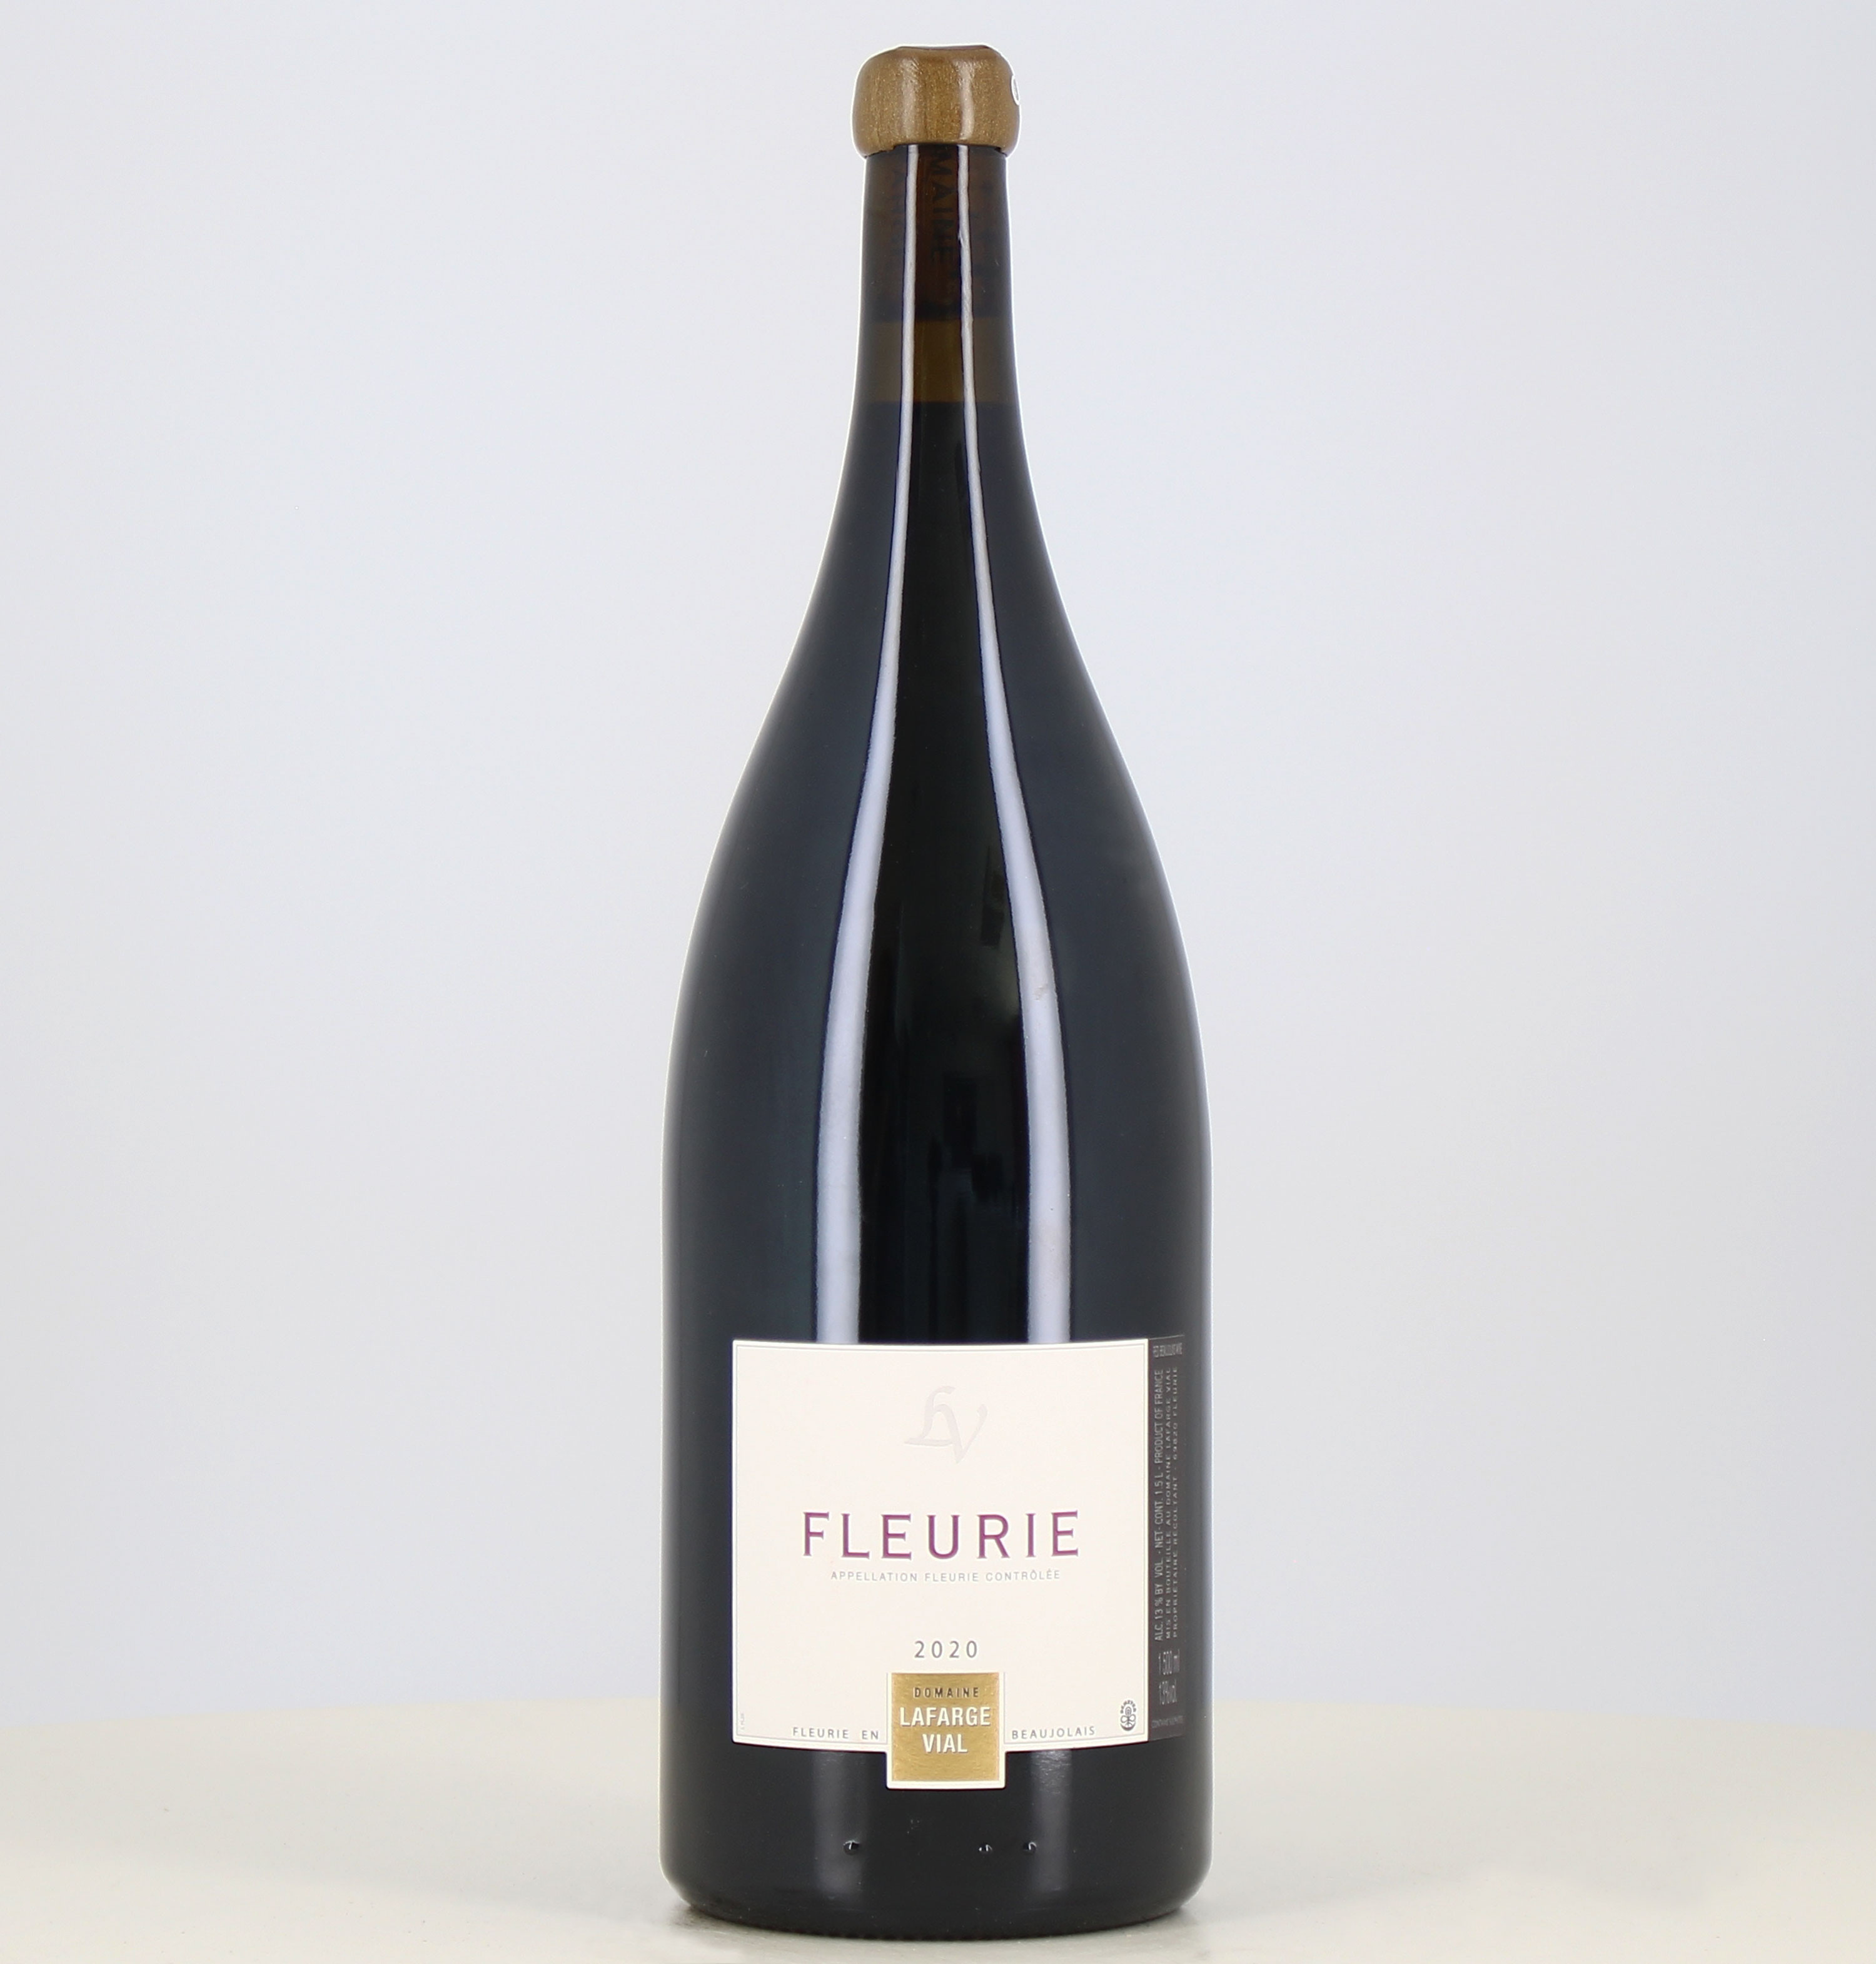 Magnum of red wine Fleurie domaine Lafarge Vial 2020 